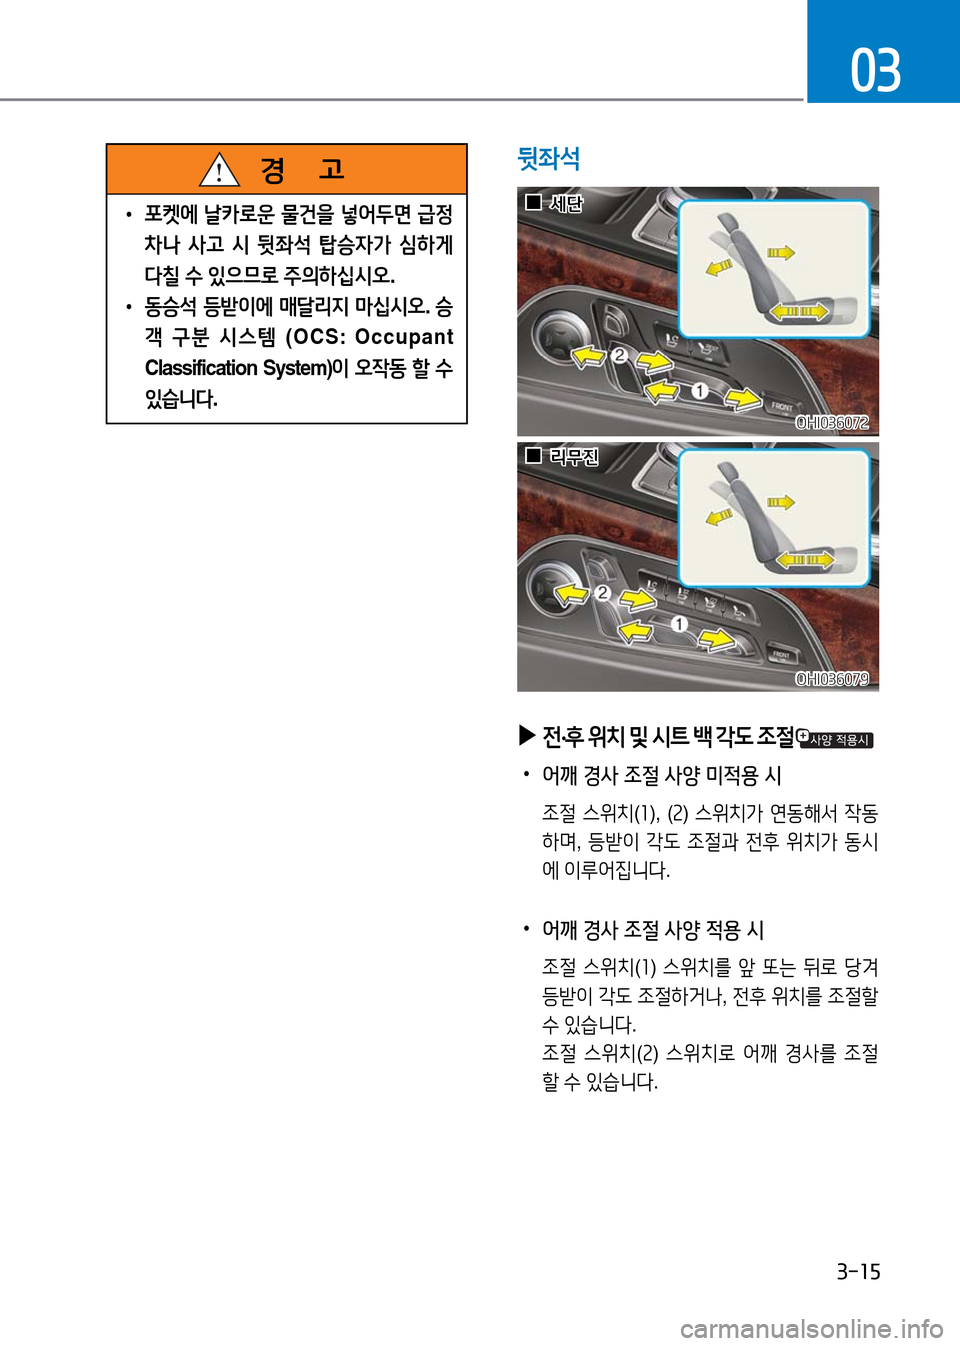 Hyundai Genesis 2016  EQ900 HI - 사용 설명서 (in Korean) 3-15
03
뒷좌석
 ▶전·후 위치 및 시트 백 각도 조절
 •어깨 경사 조절 사양 미적용 시
 조절 스위치(1),  (2) 스위치가 연동해서 작동
하며, 등받이 각도 �